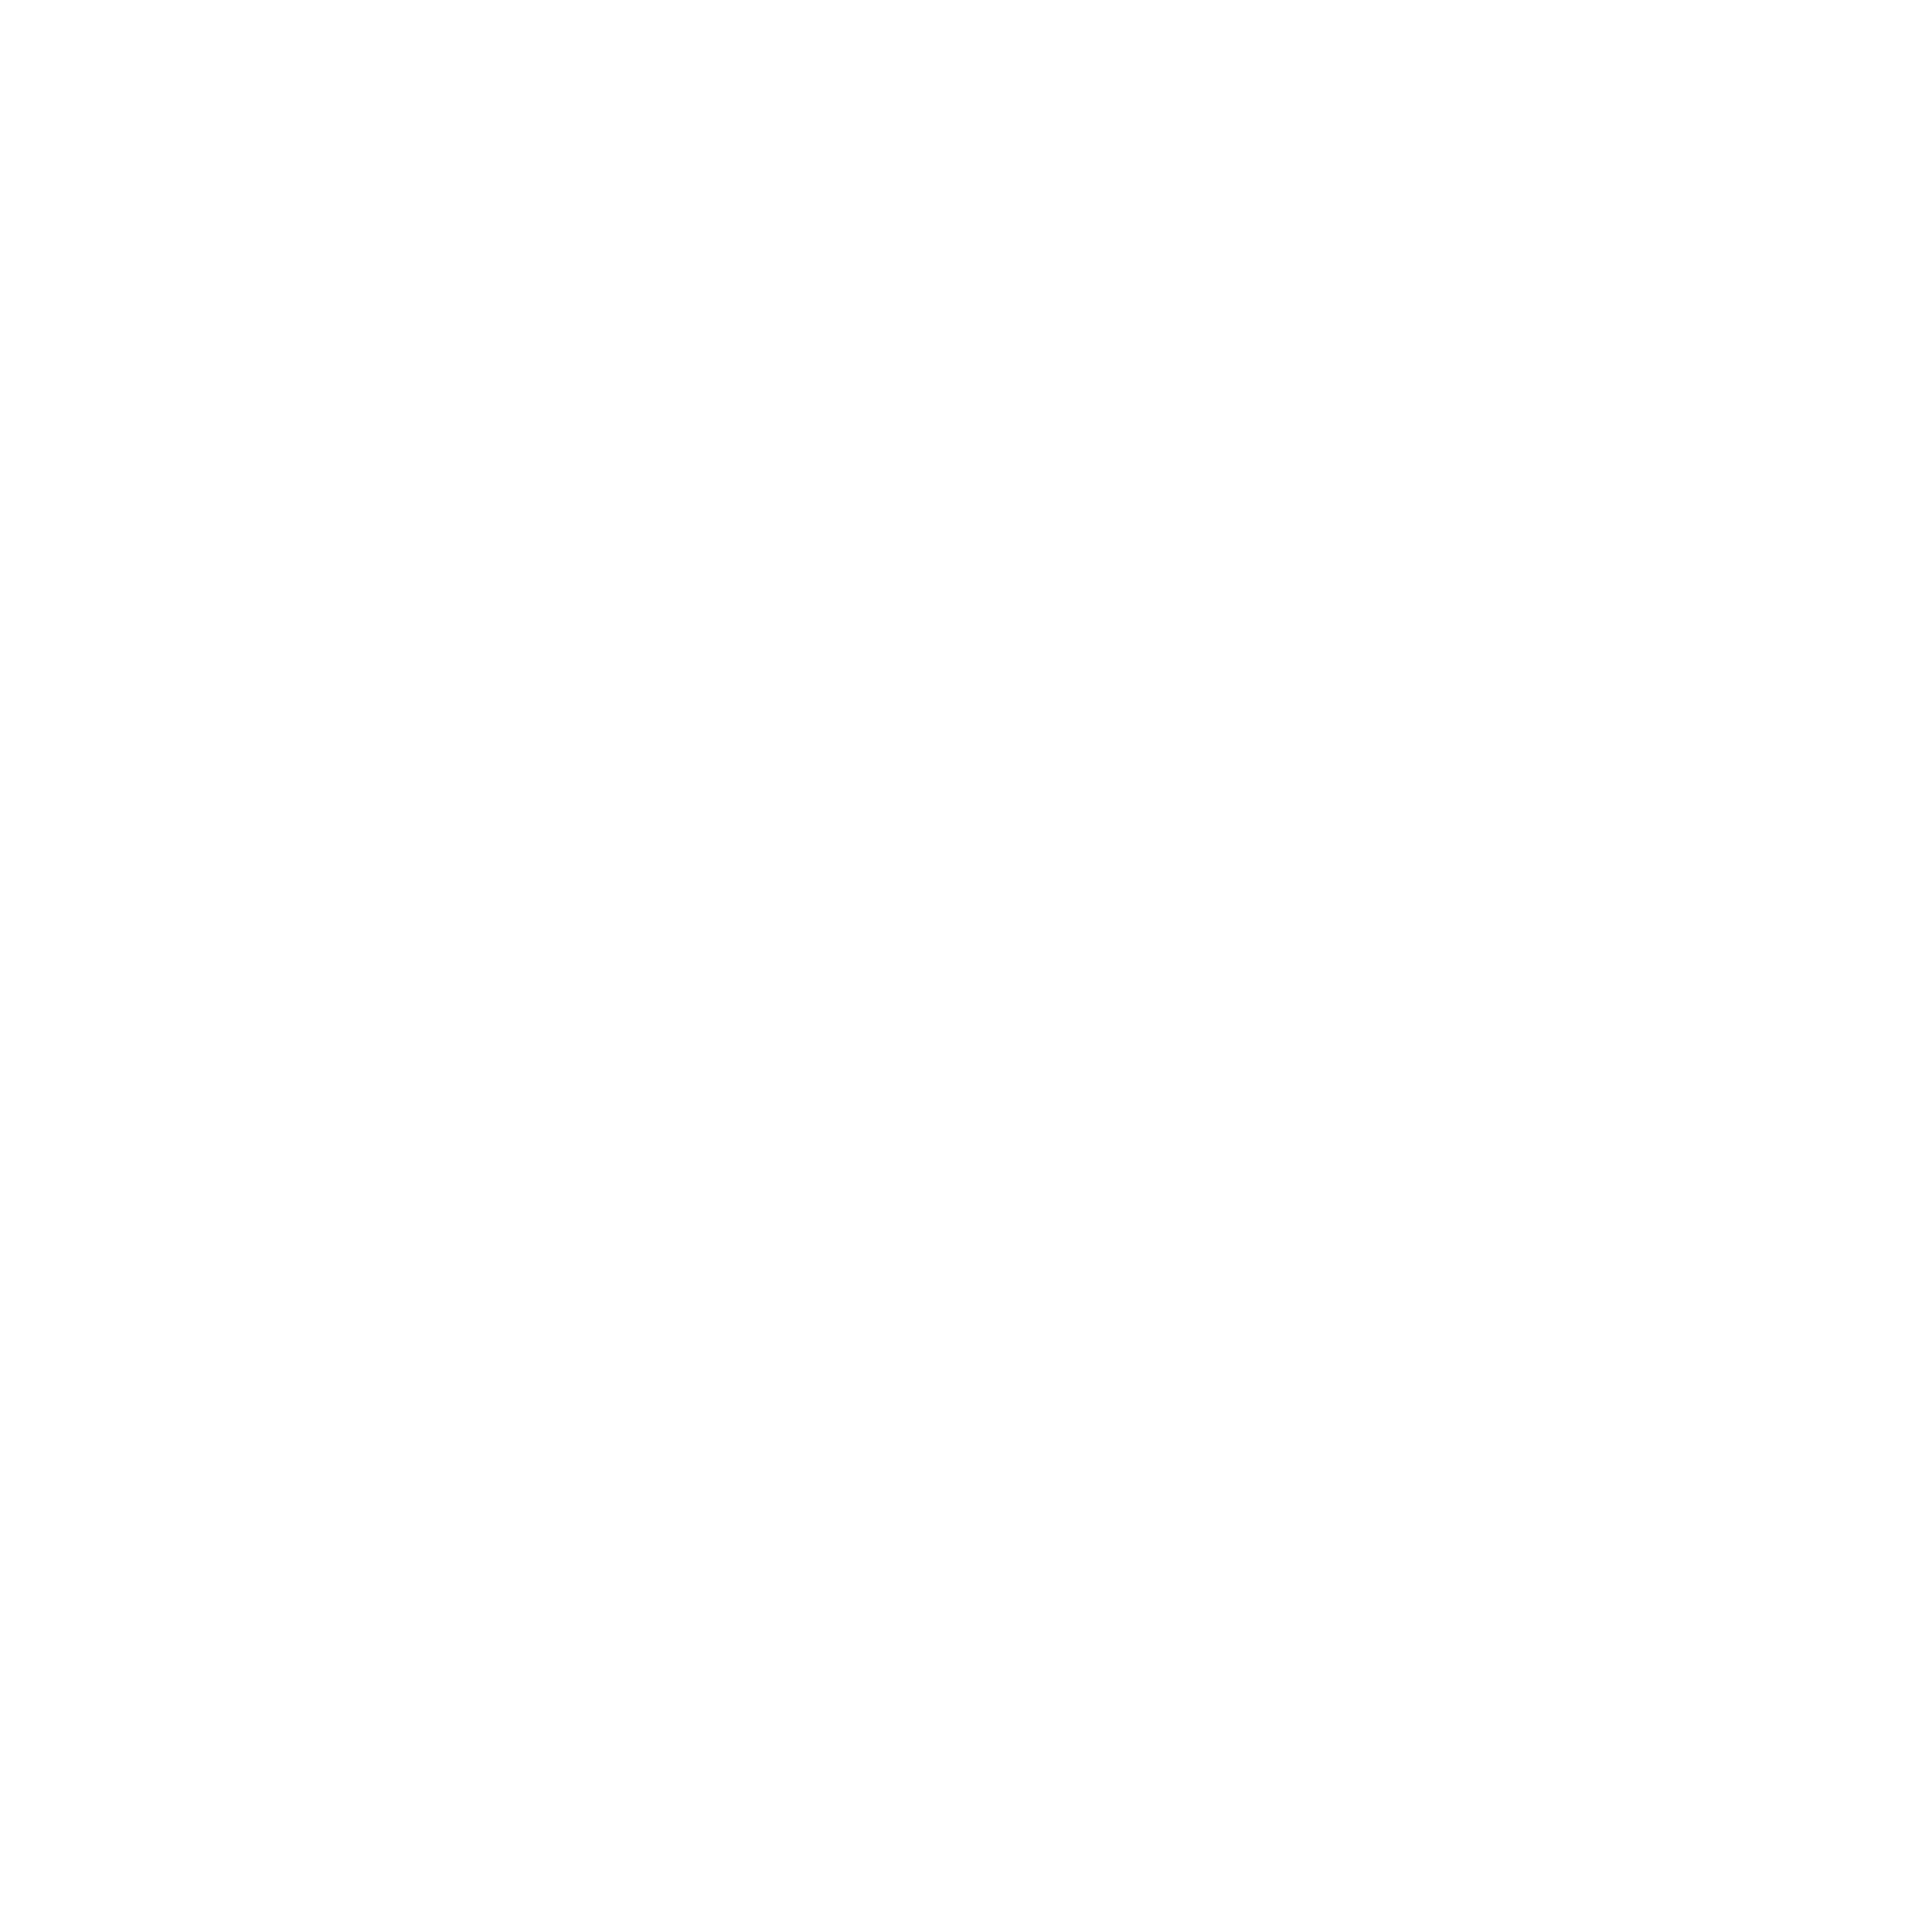 Rupak Group